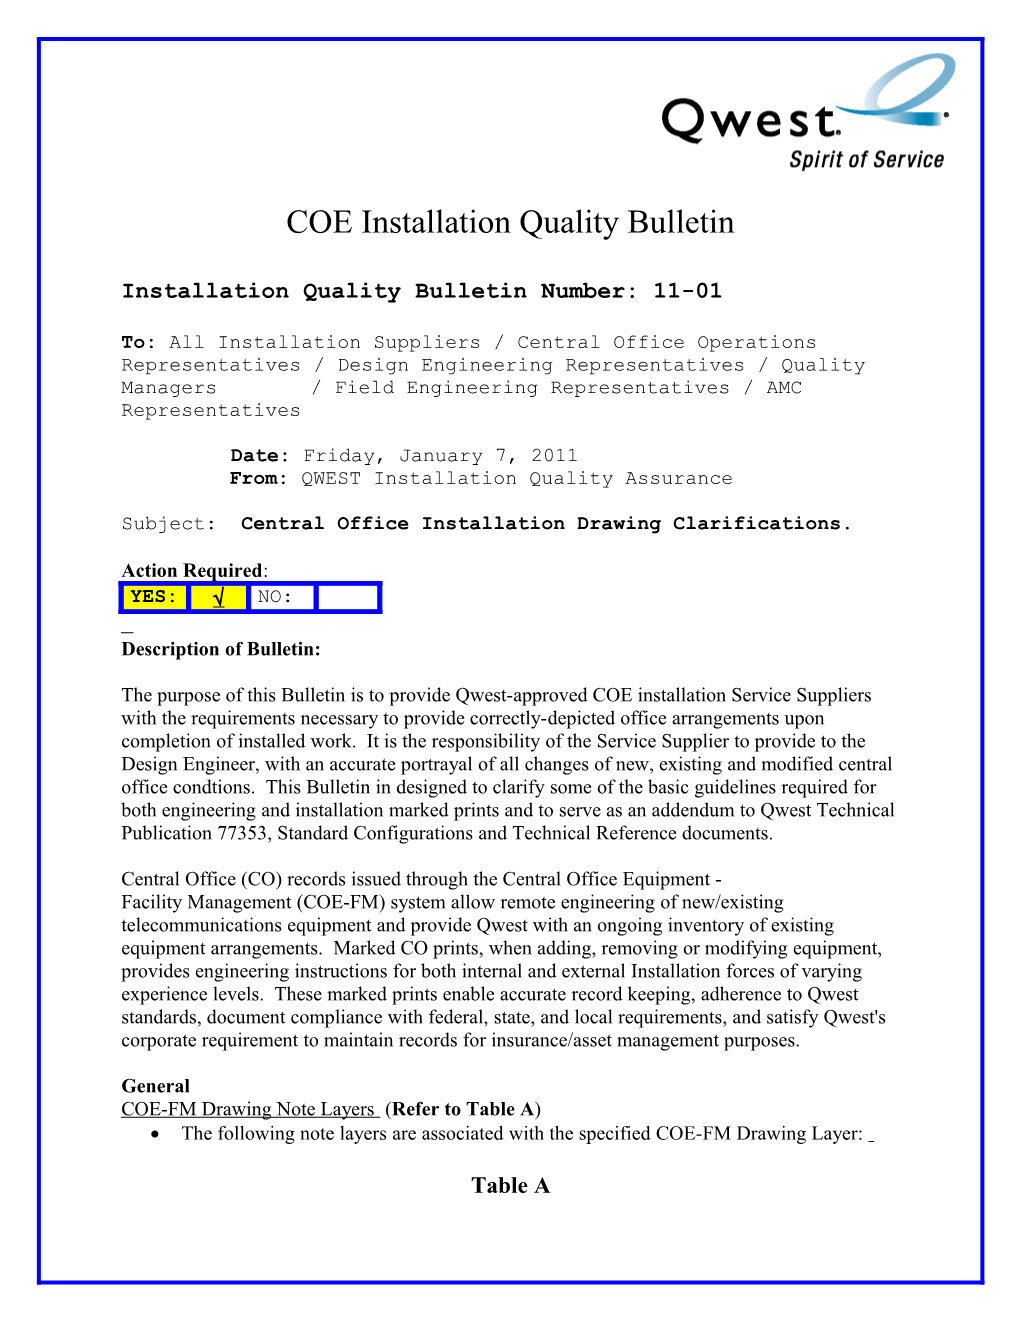 Installation Quality Bulletin 11-01